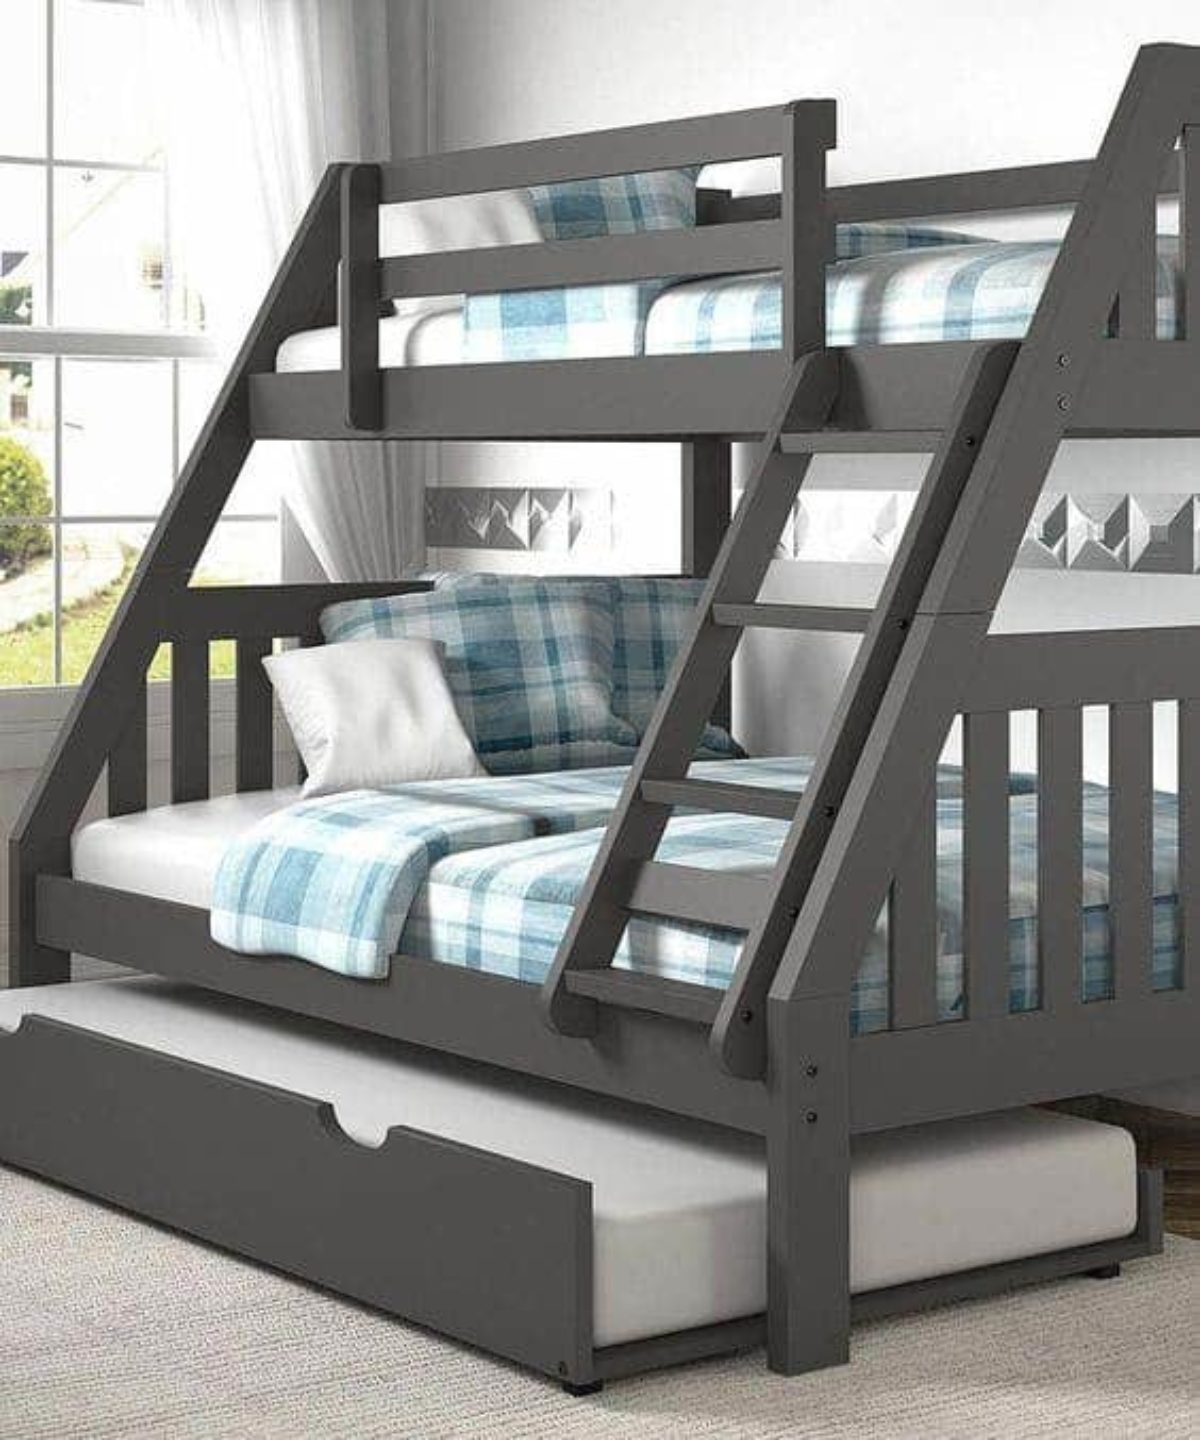 5 Steps To Make A Bunk Bed Ladder Safer, How To Make A Wooden Ladder For Bunk Bed